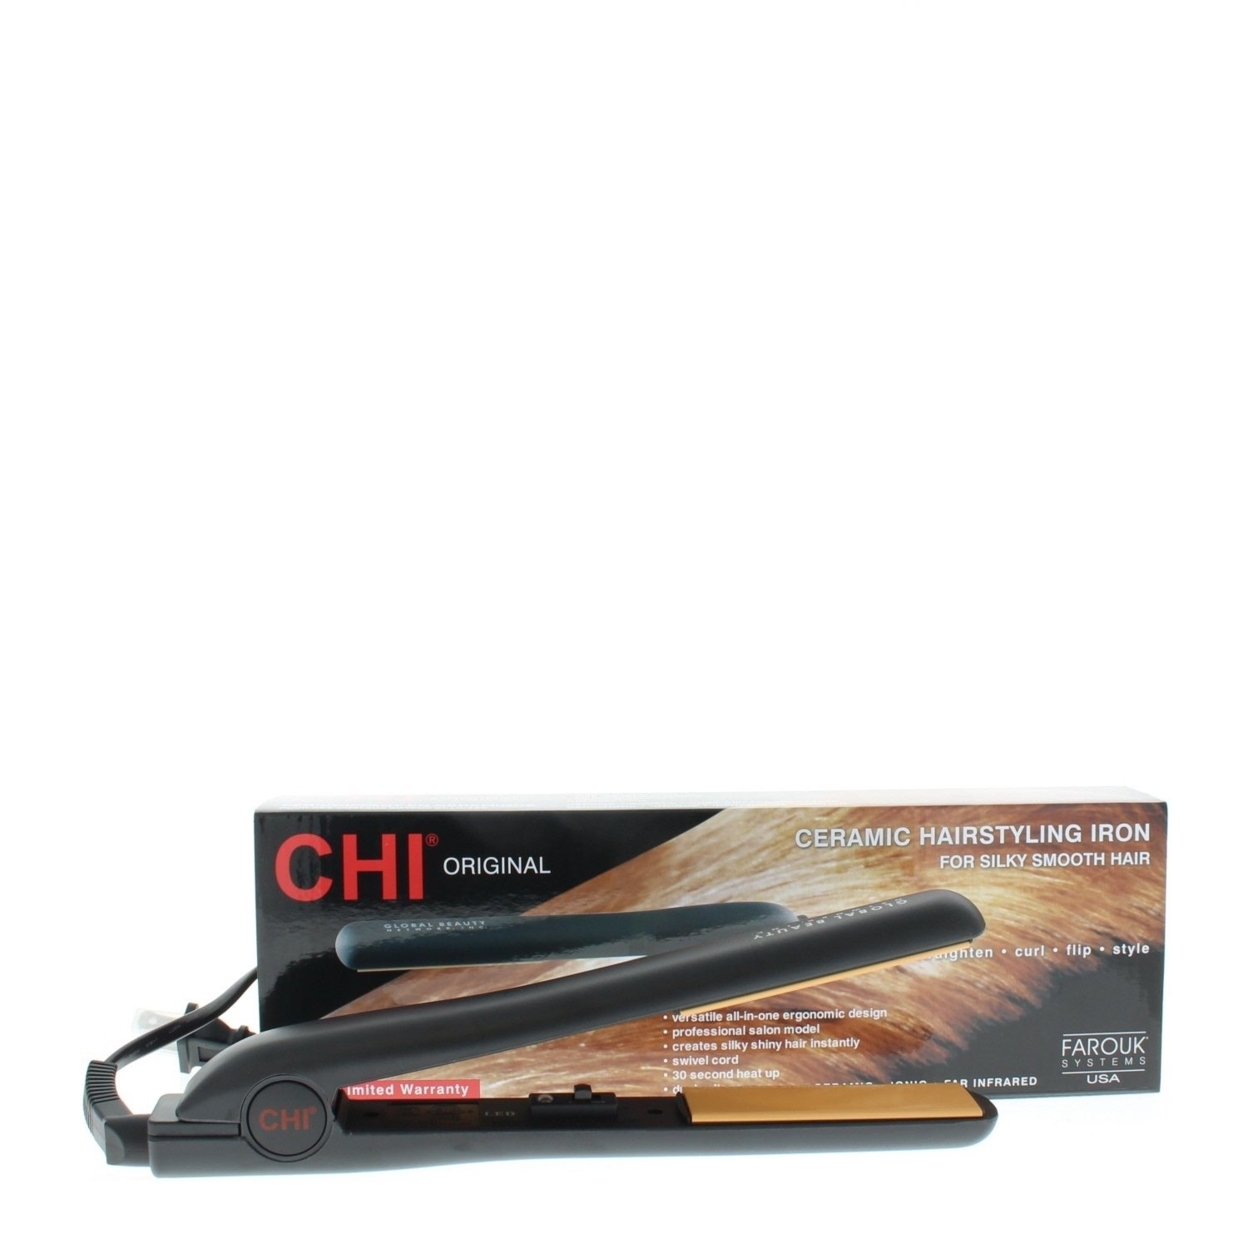 Chi Original Ceramic Hairstyling 1 Iron, Black - image 1 of 2